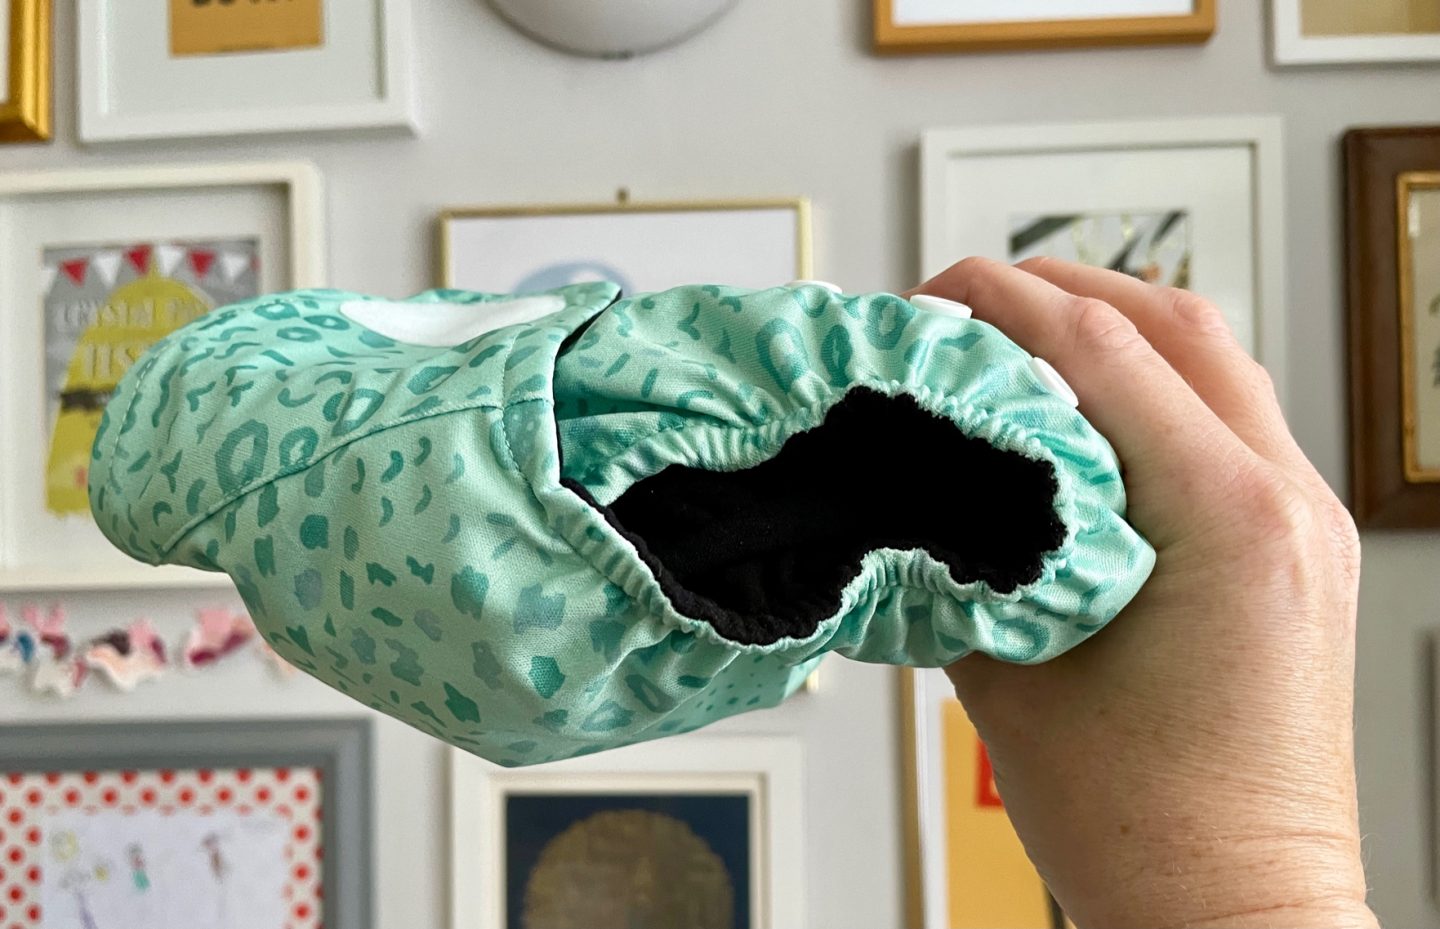 ModiBodi washable nappy - new cloth nappy from makers of period underwear 